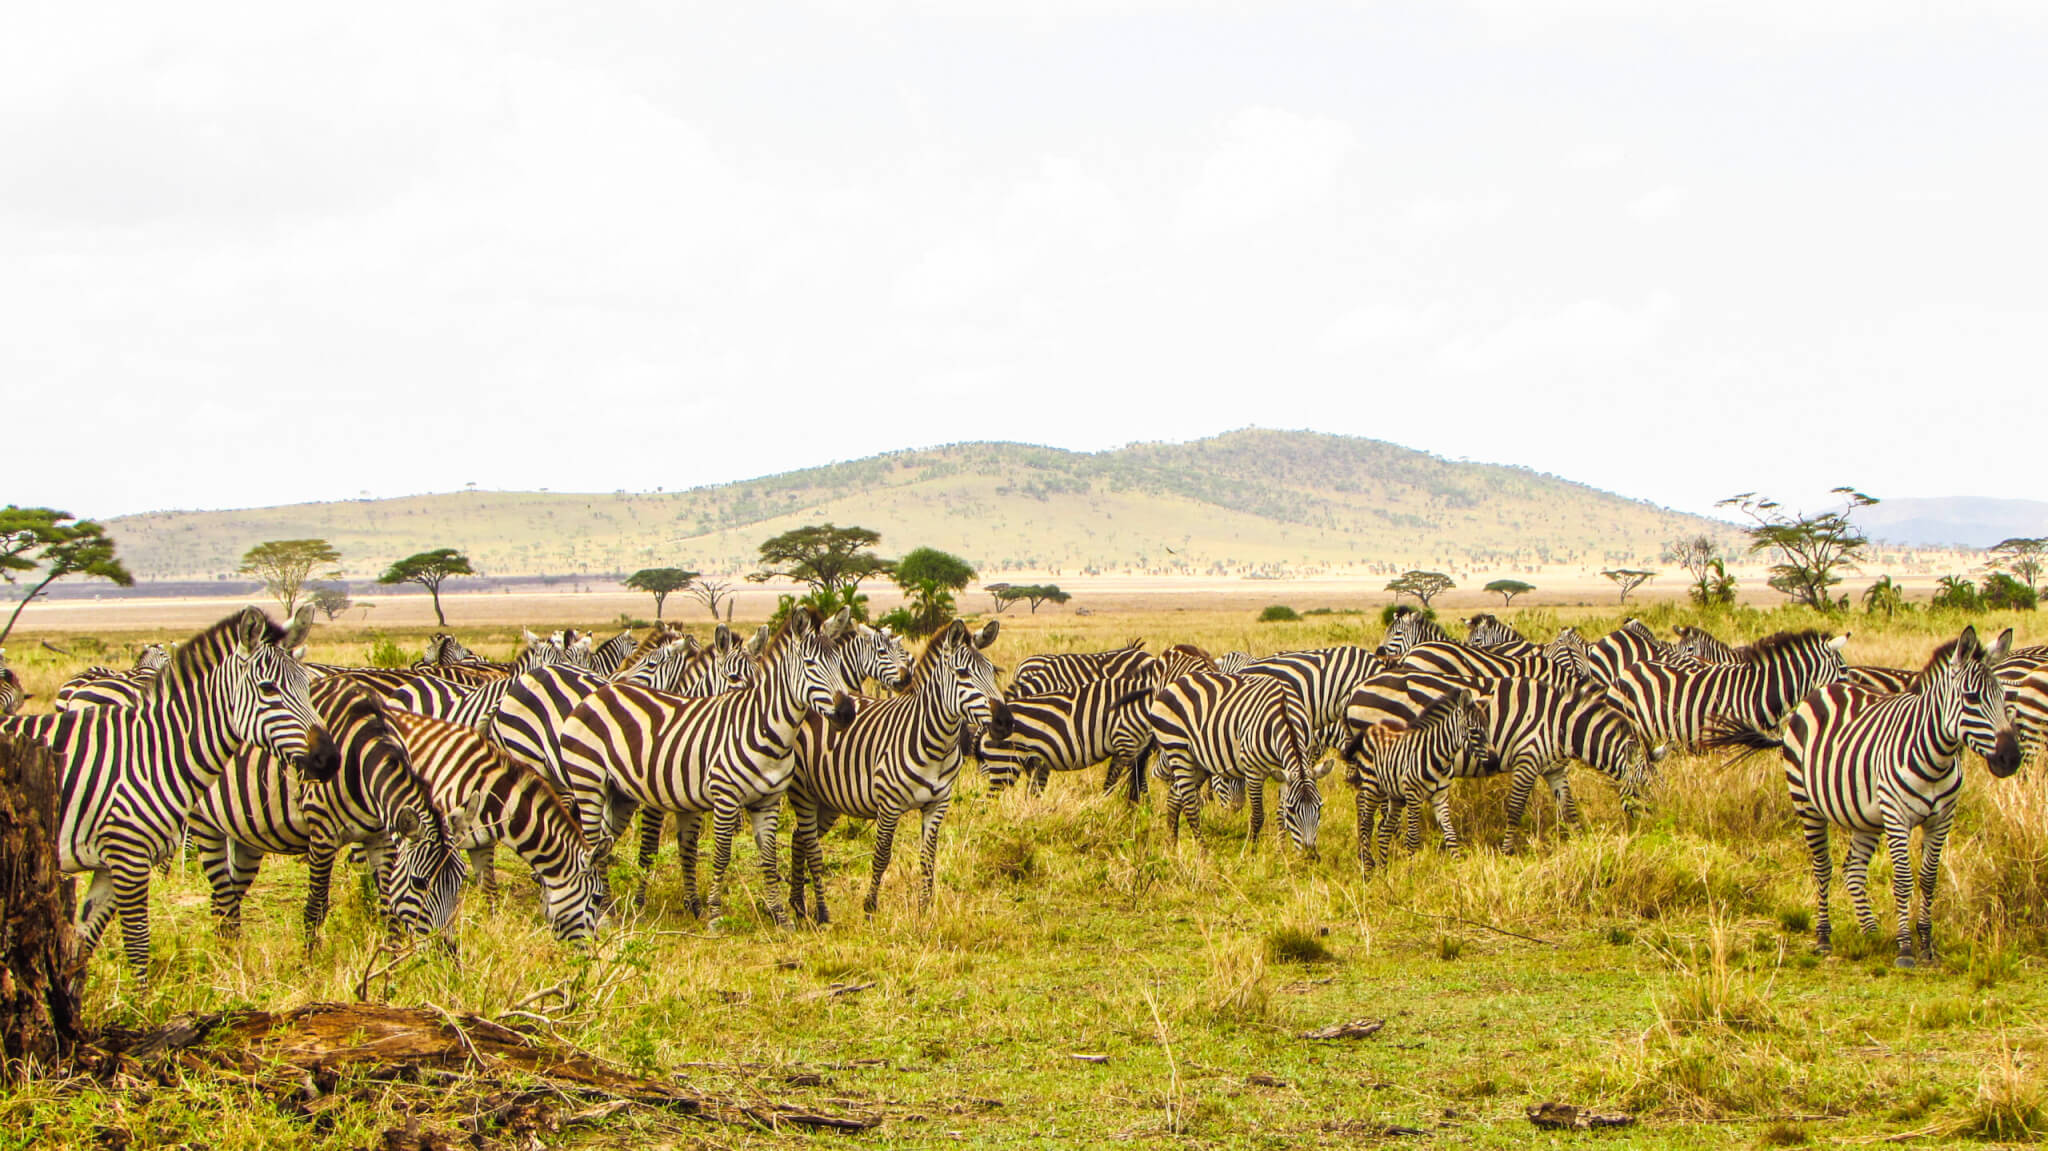 A dazzle of zebras in serengeti national park